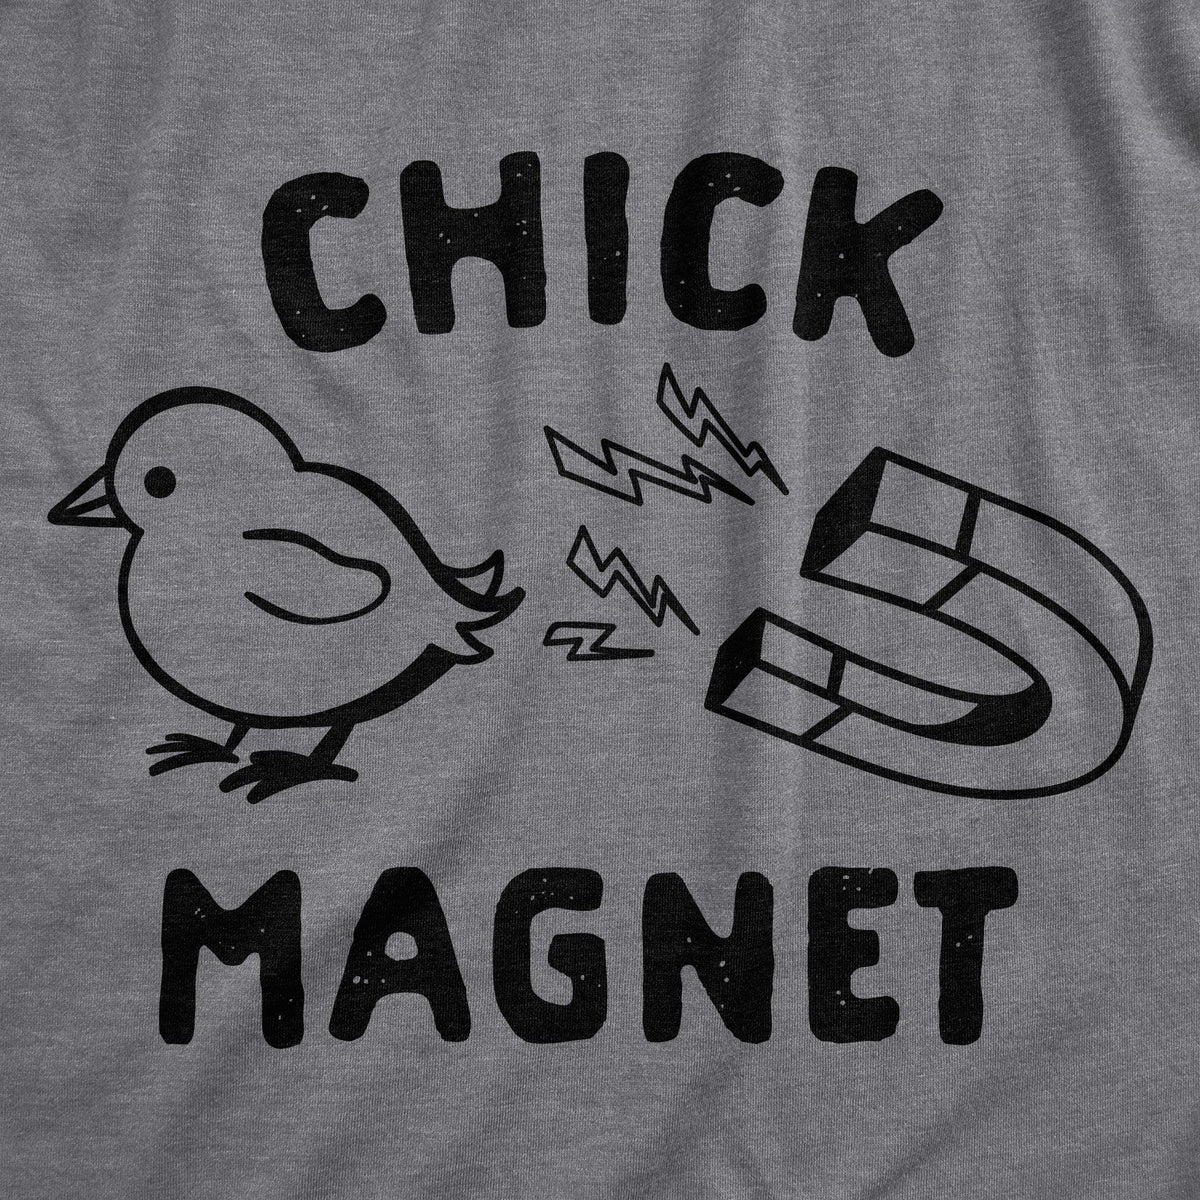 Chick Magnet Toddler Tshirt - Crazy Dog T-Shirts